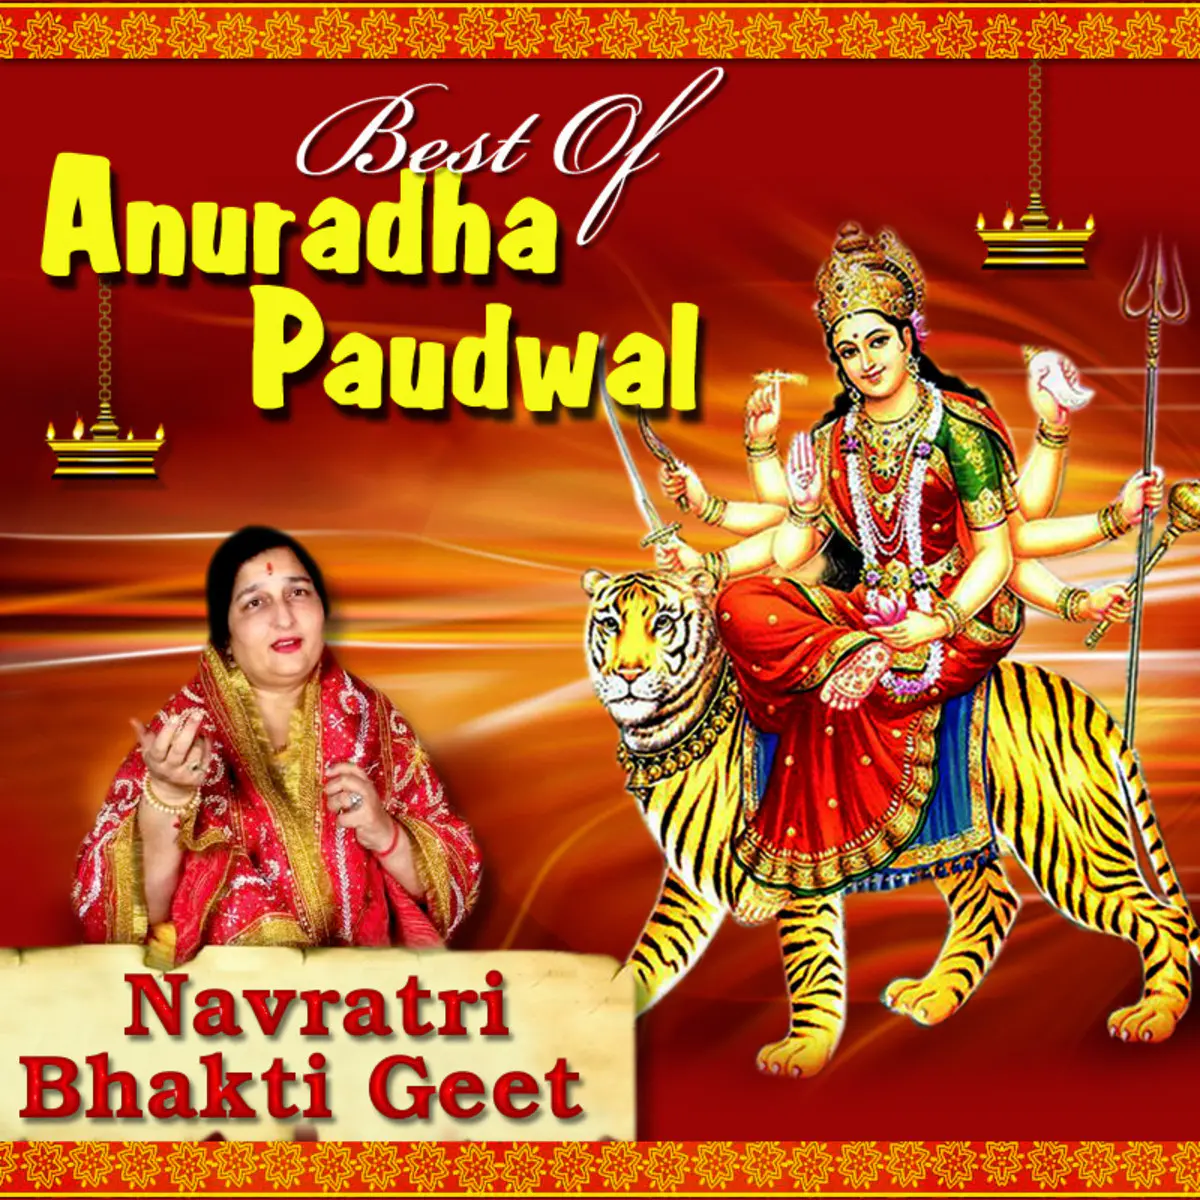 Navratri Bhakti Geet Songs Download Navratri Bhakti Geet Bhakti Songs Mp3 Online Free On Gaana Com नॉनस्टॉप माता रानी के भजन nonstop mata rani ke bhajan : navratri bhakti geet songs download